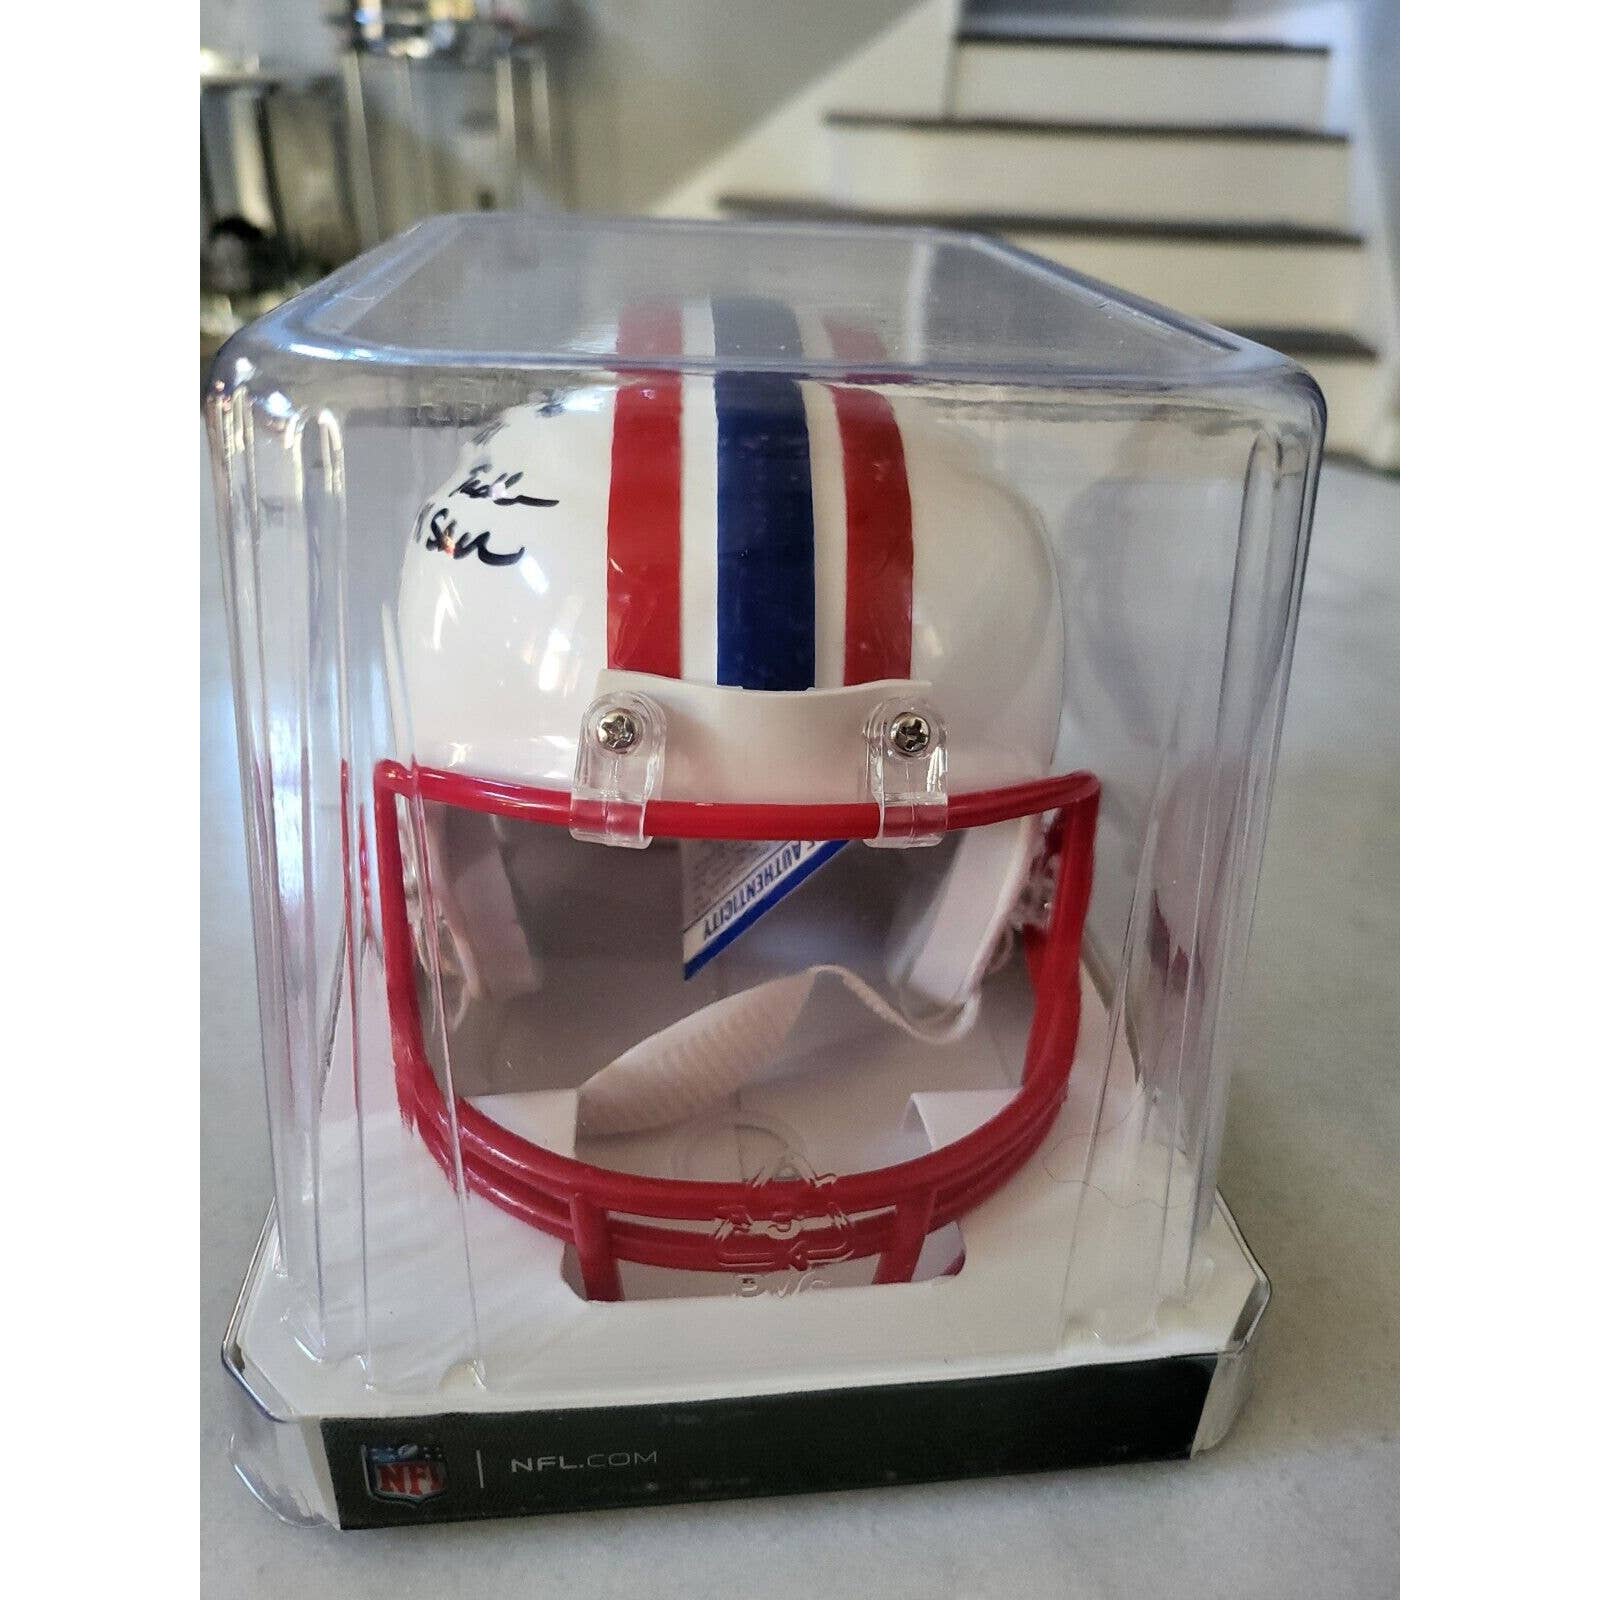 Robert Brazile Autographed/Signed Mini Helmet PSA/DNA COA Houston Oilers - TreasuresEvolved